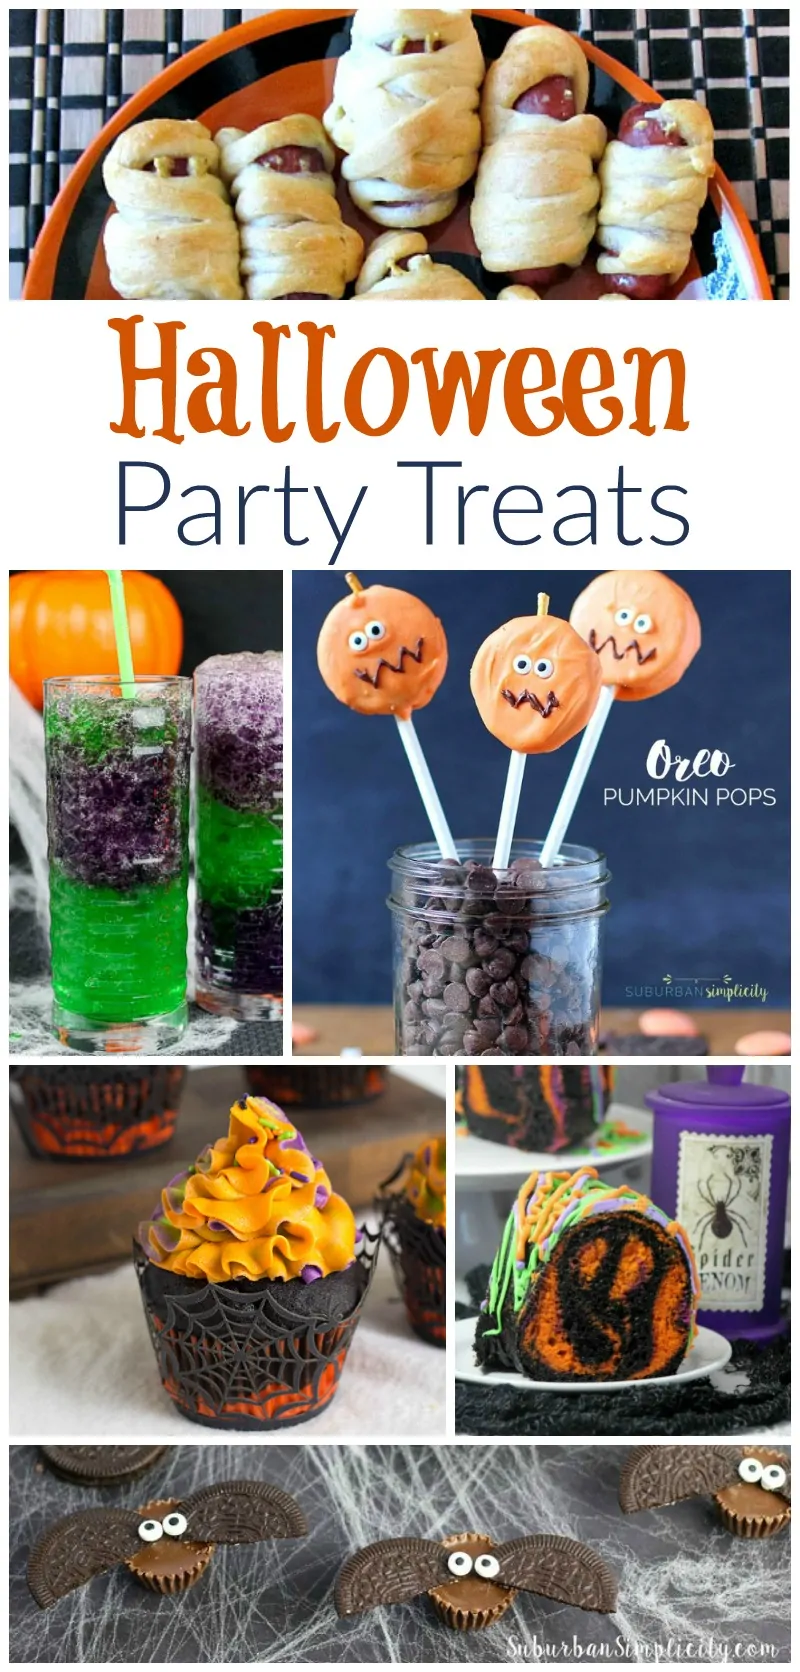 Halloween Party Treats - Spooky Halloween Treats